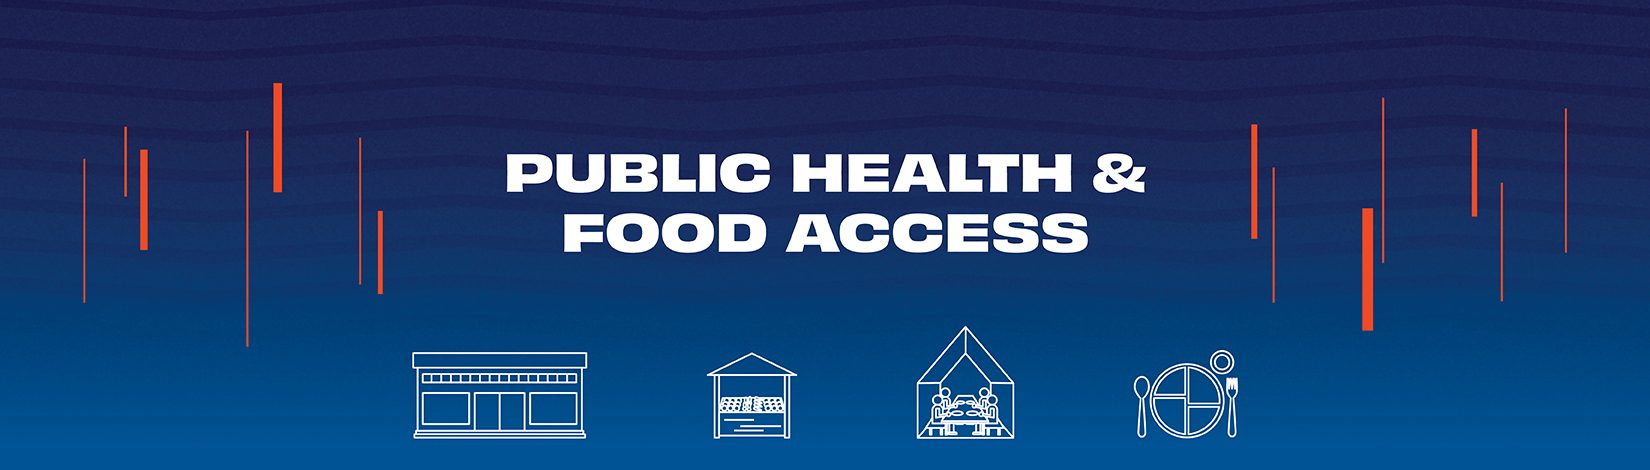 Public Health & Food Access Banner